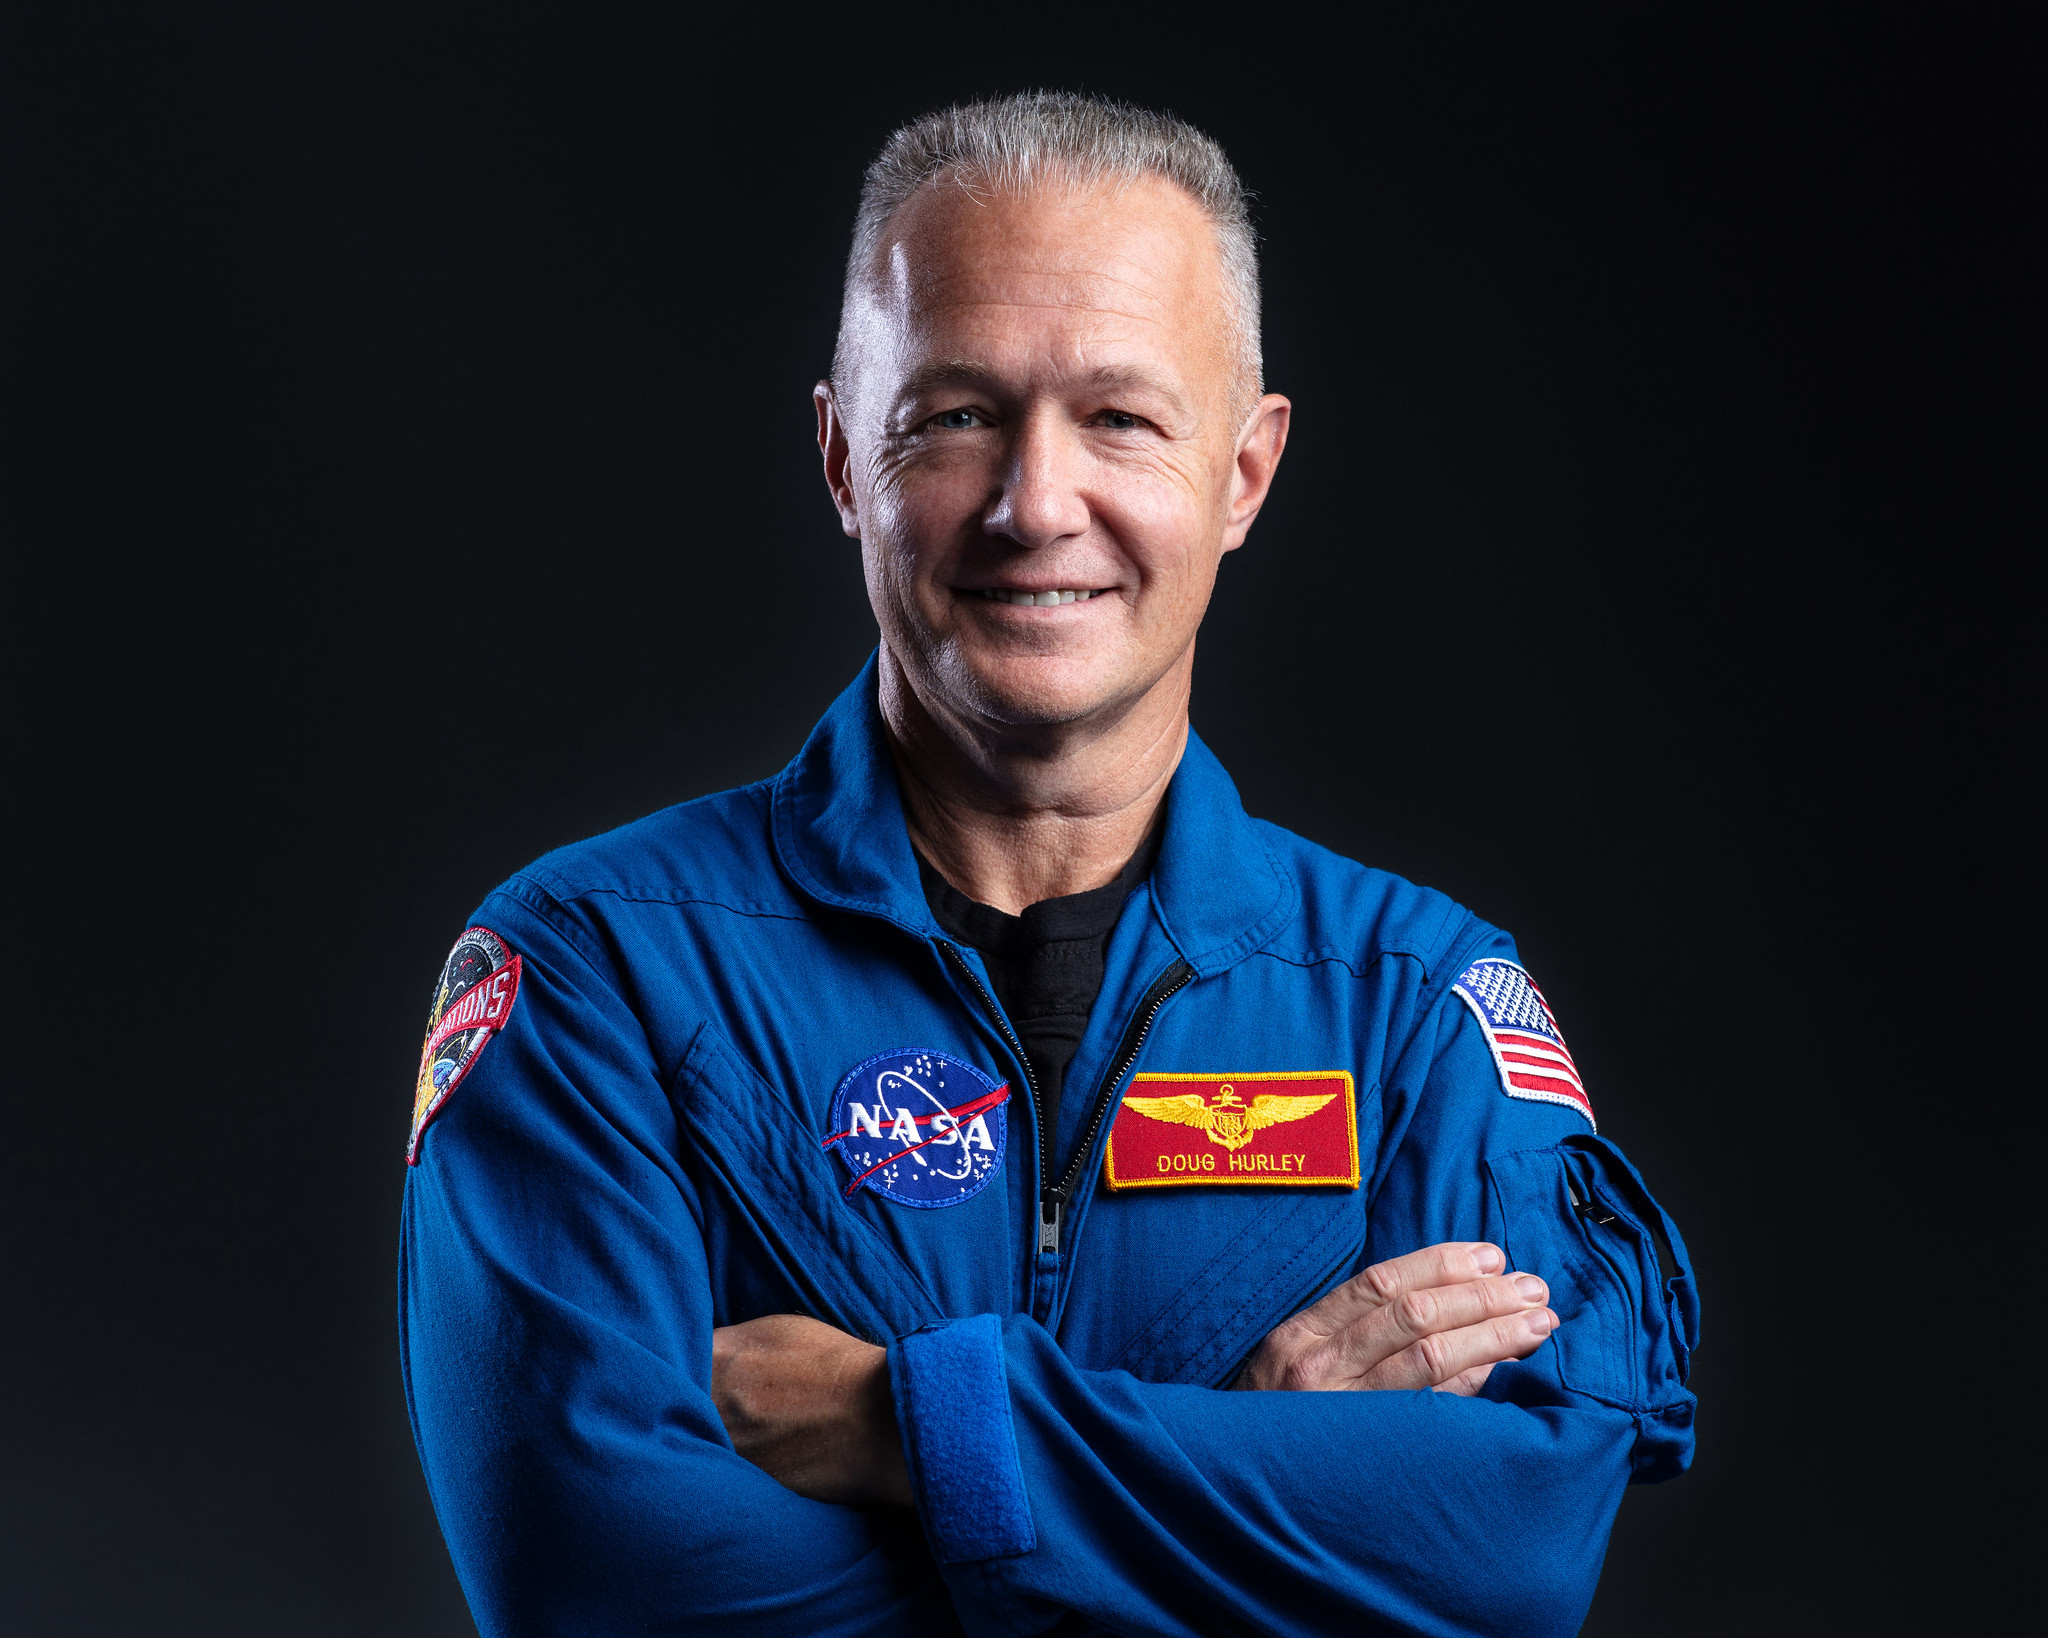 NASA astronaut Doug Hurley